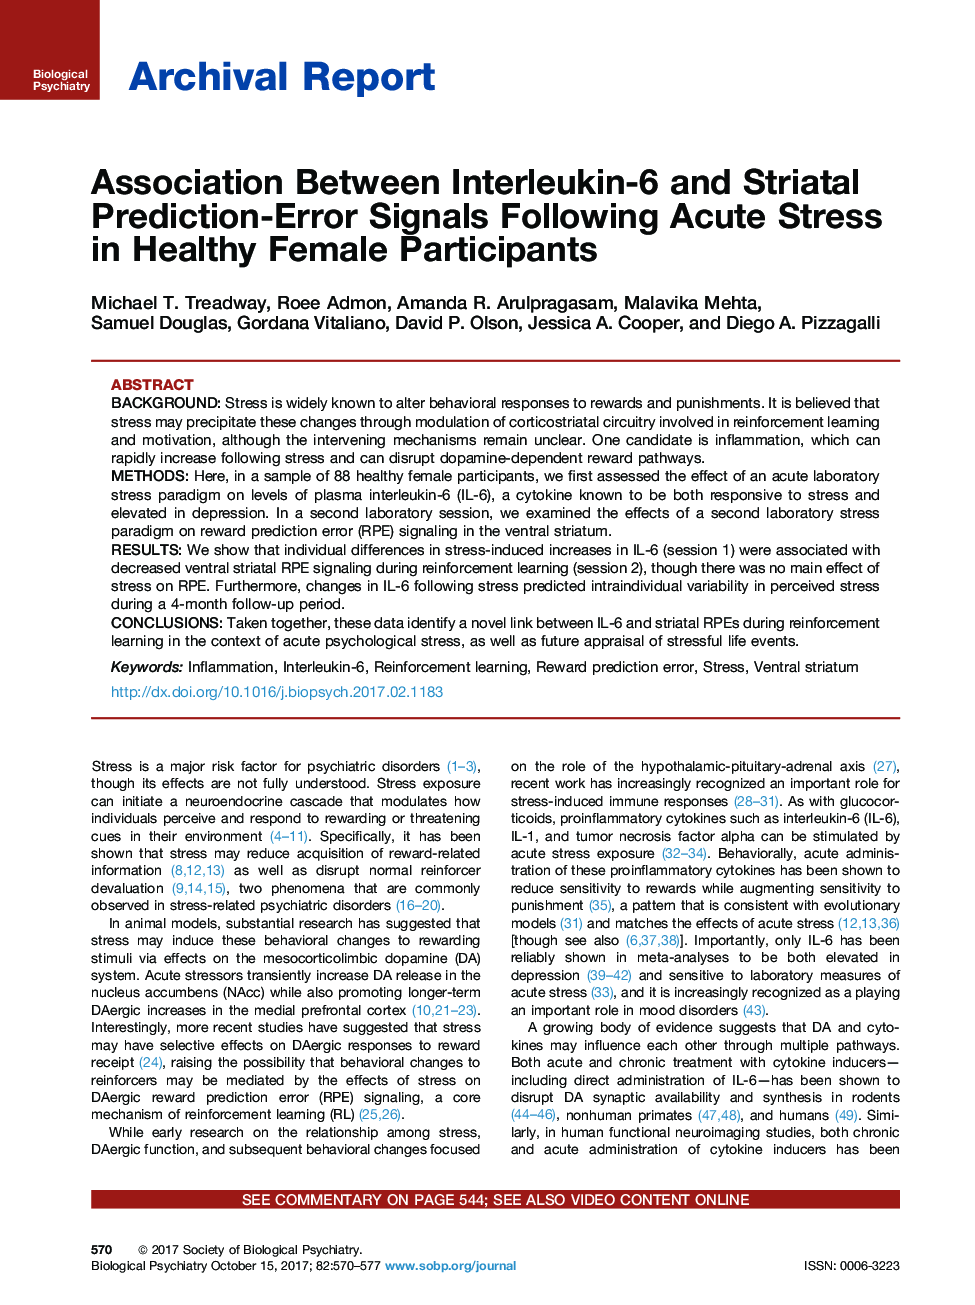 Archival ReportAssociation Between Interleukin-6 and Striatal Prediction-Error Signals Following Acute Stress in Healthy Female Participants